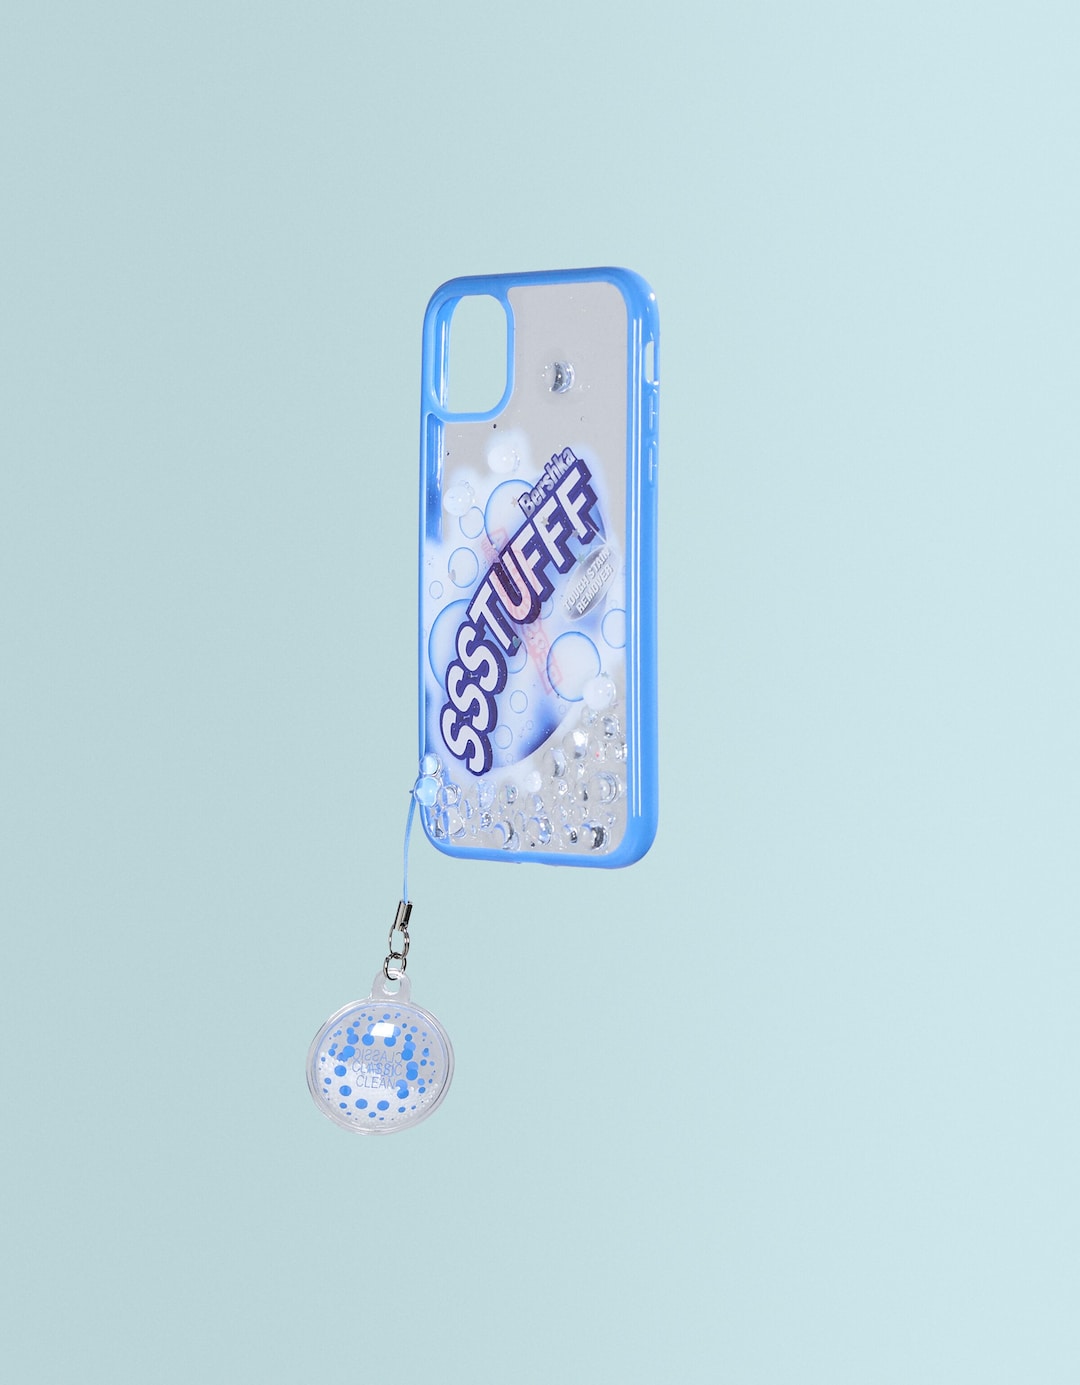 Coque mobile iPhone 11 XR SSSTUFFF X BERSHKA perle fantaisie interactive bulles